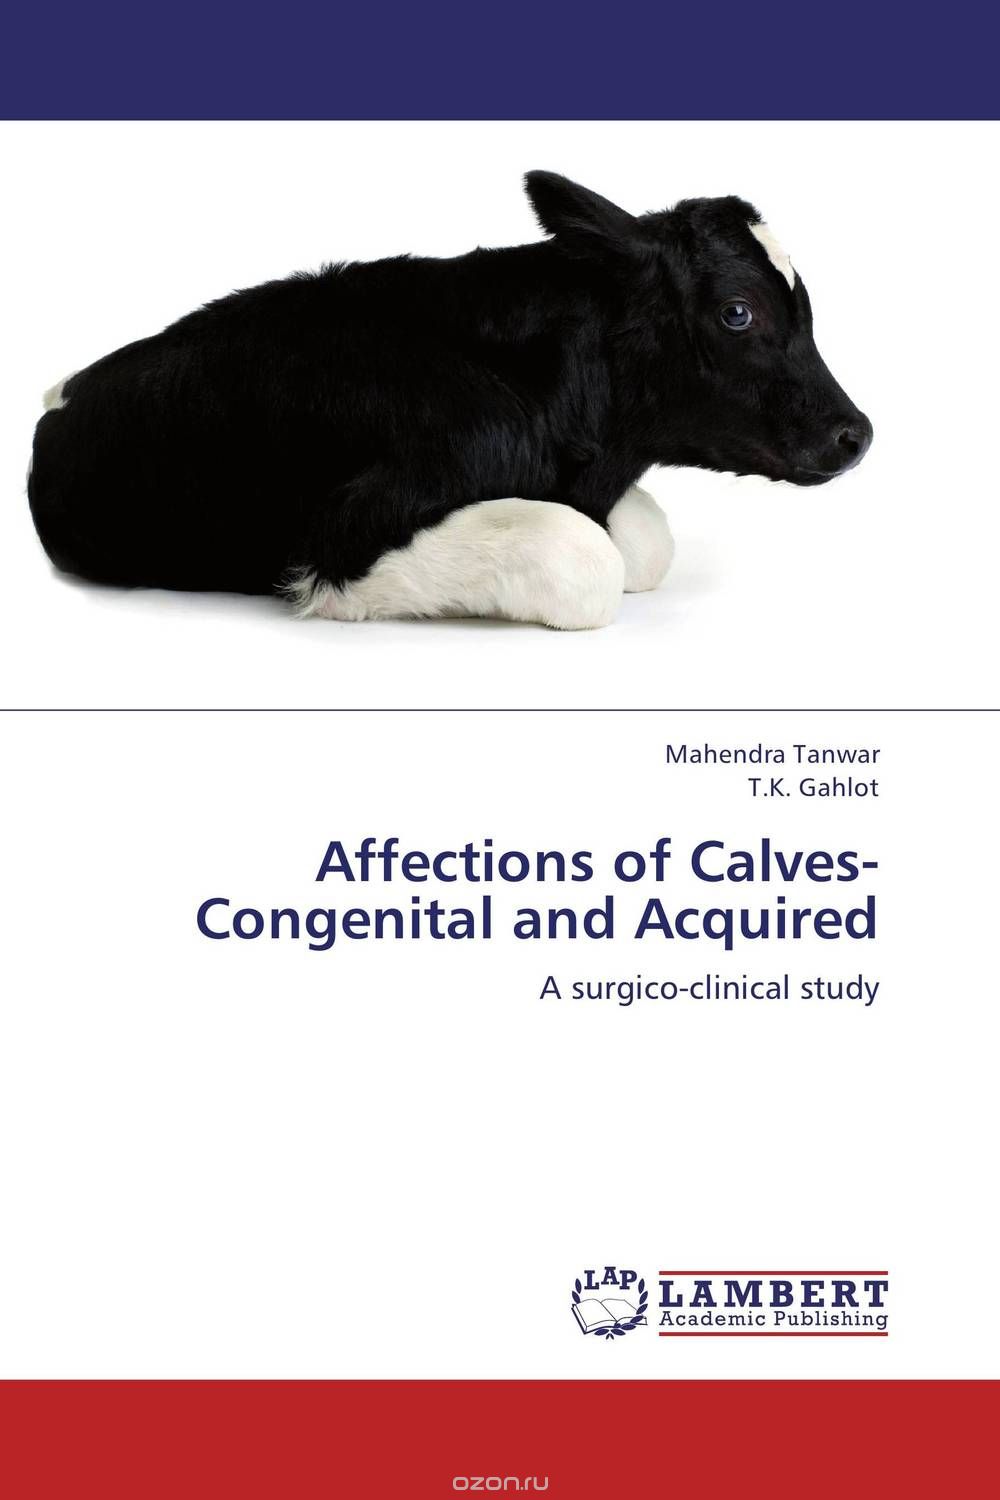 Скачать книгу "Affections of Calves-Congenital and Acquired"